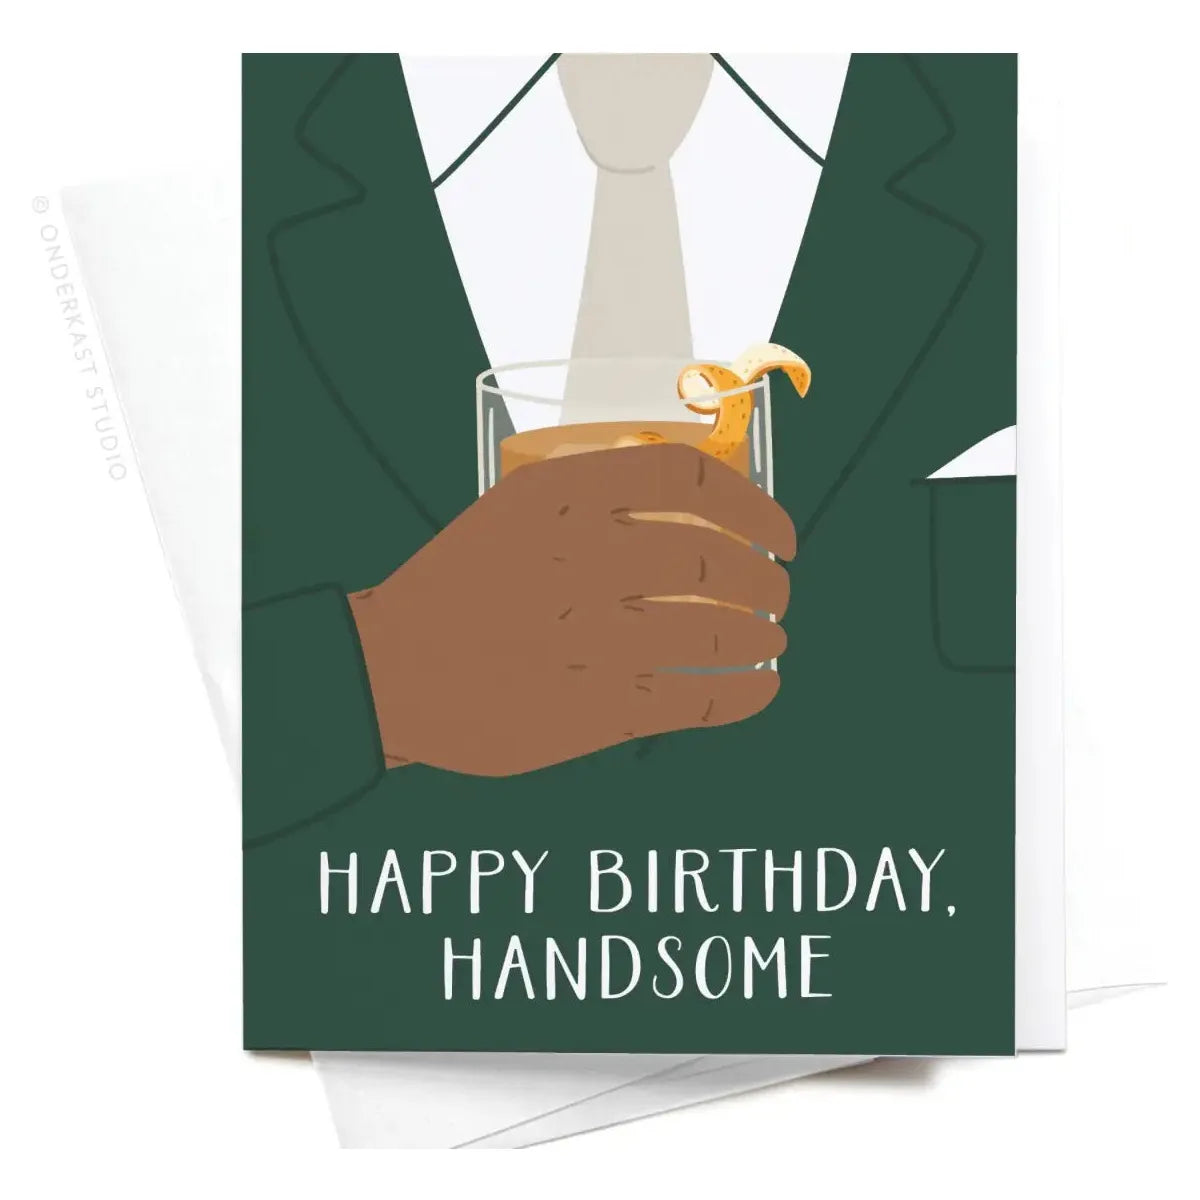 "Happy Birthday Handsome" Greeting Card